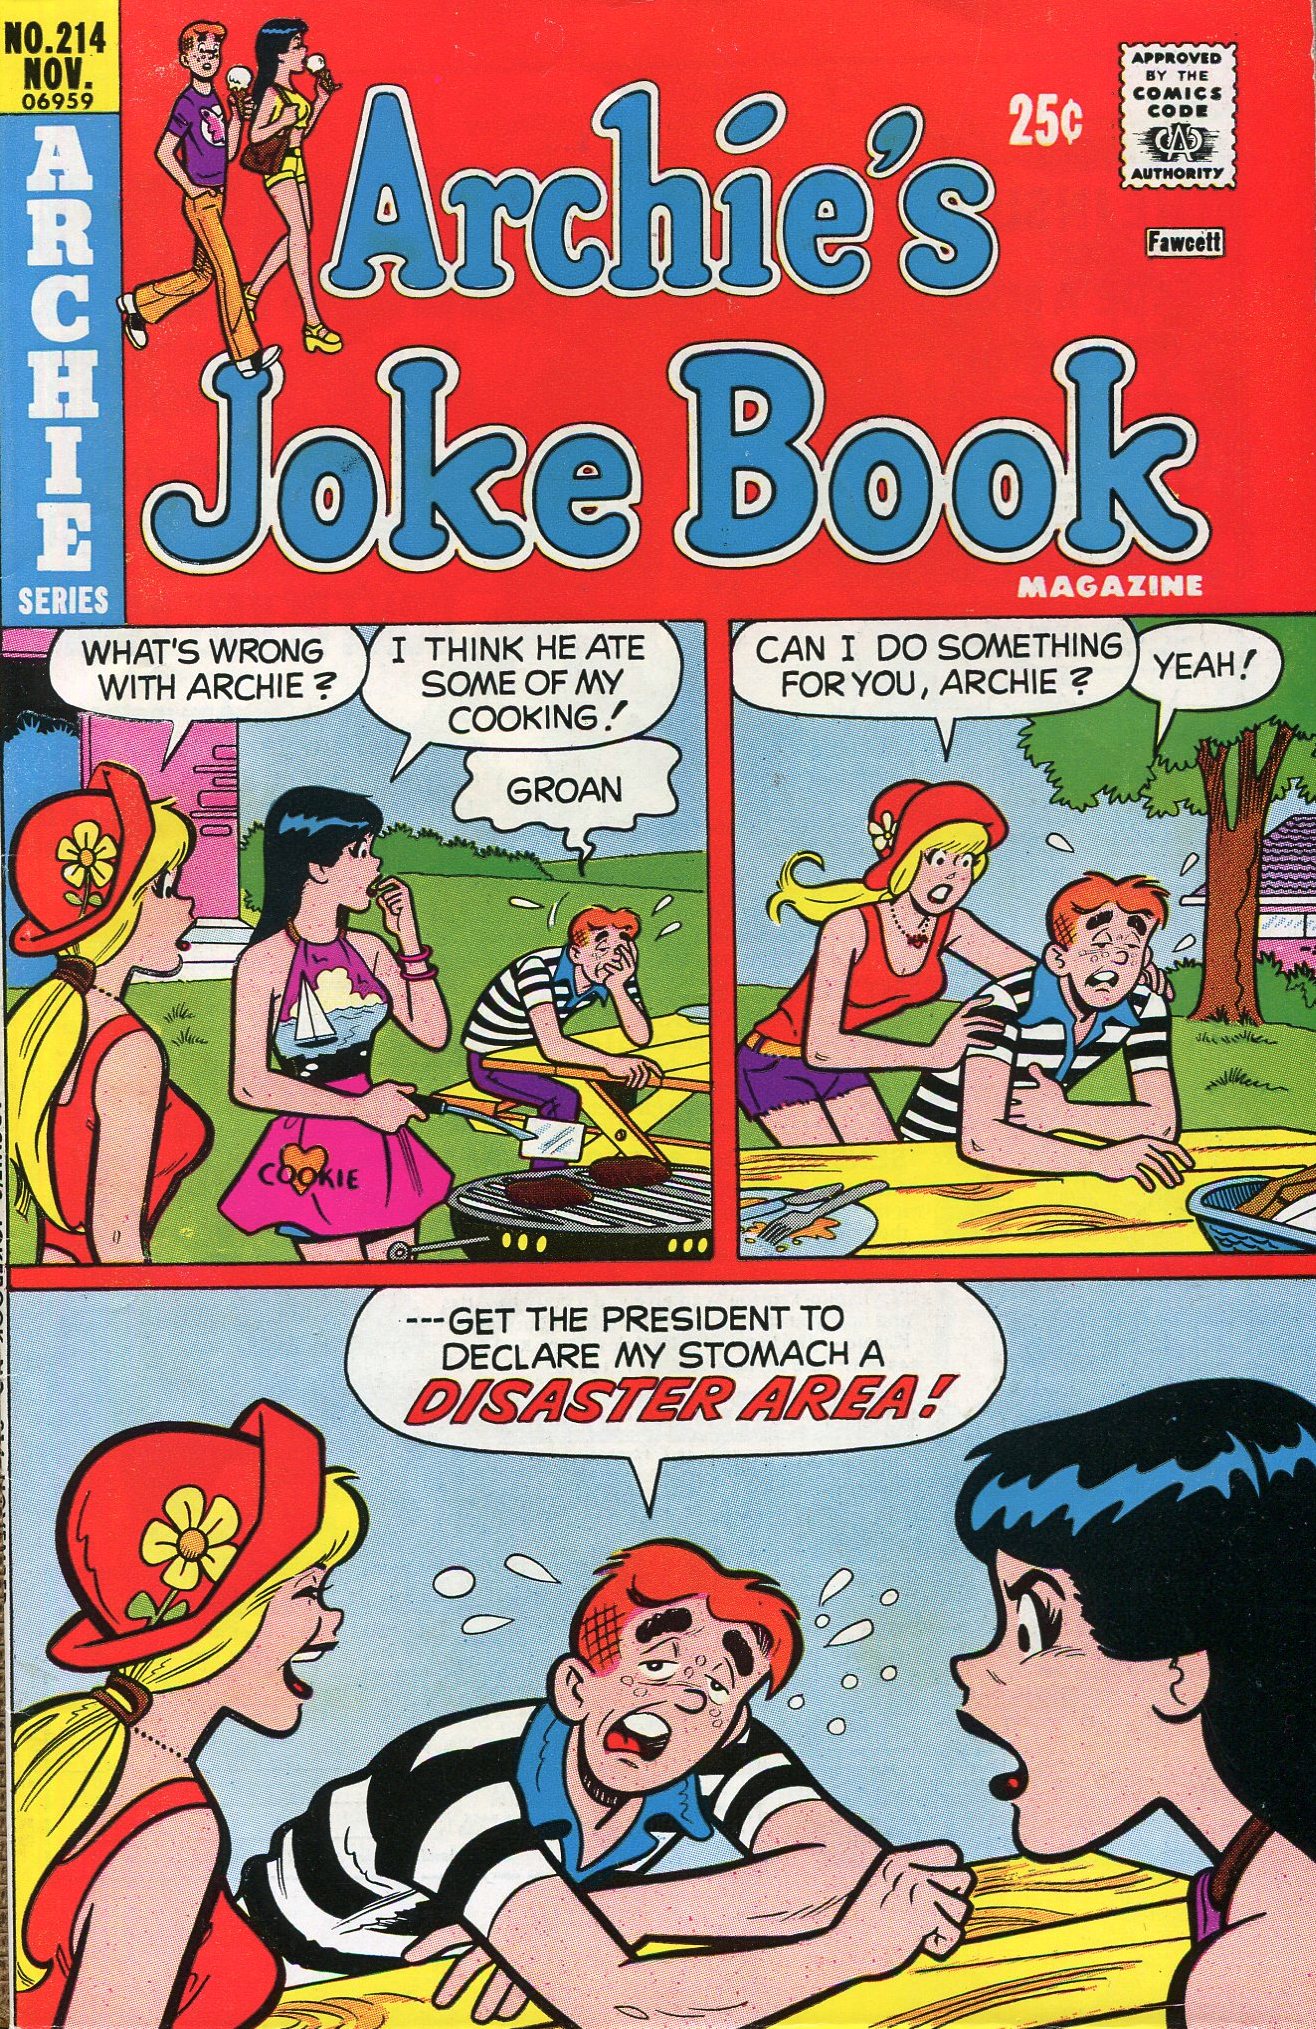 Read online Archie's Joke Book Magazine comic -  Issue #214 - 1